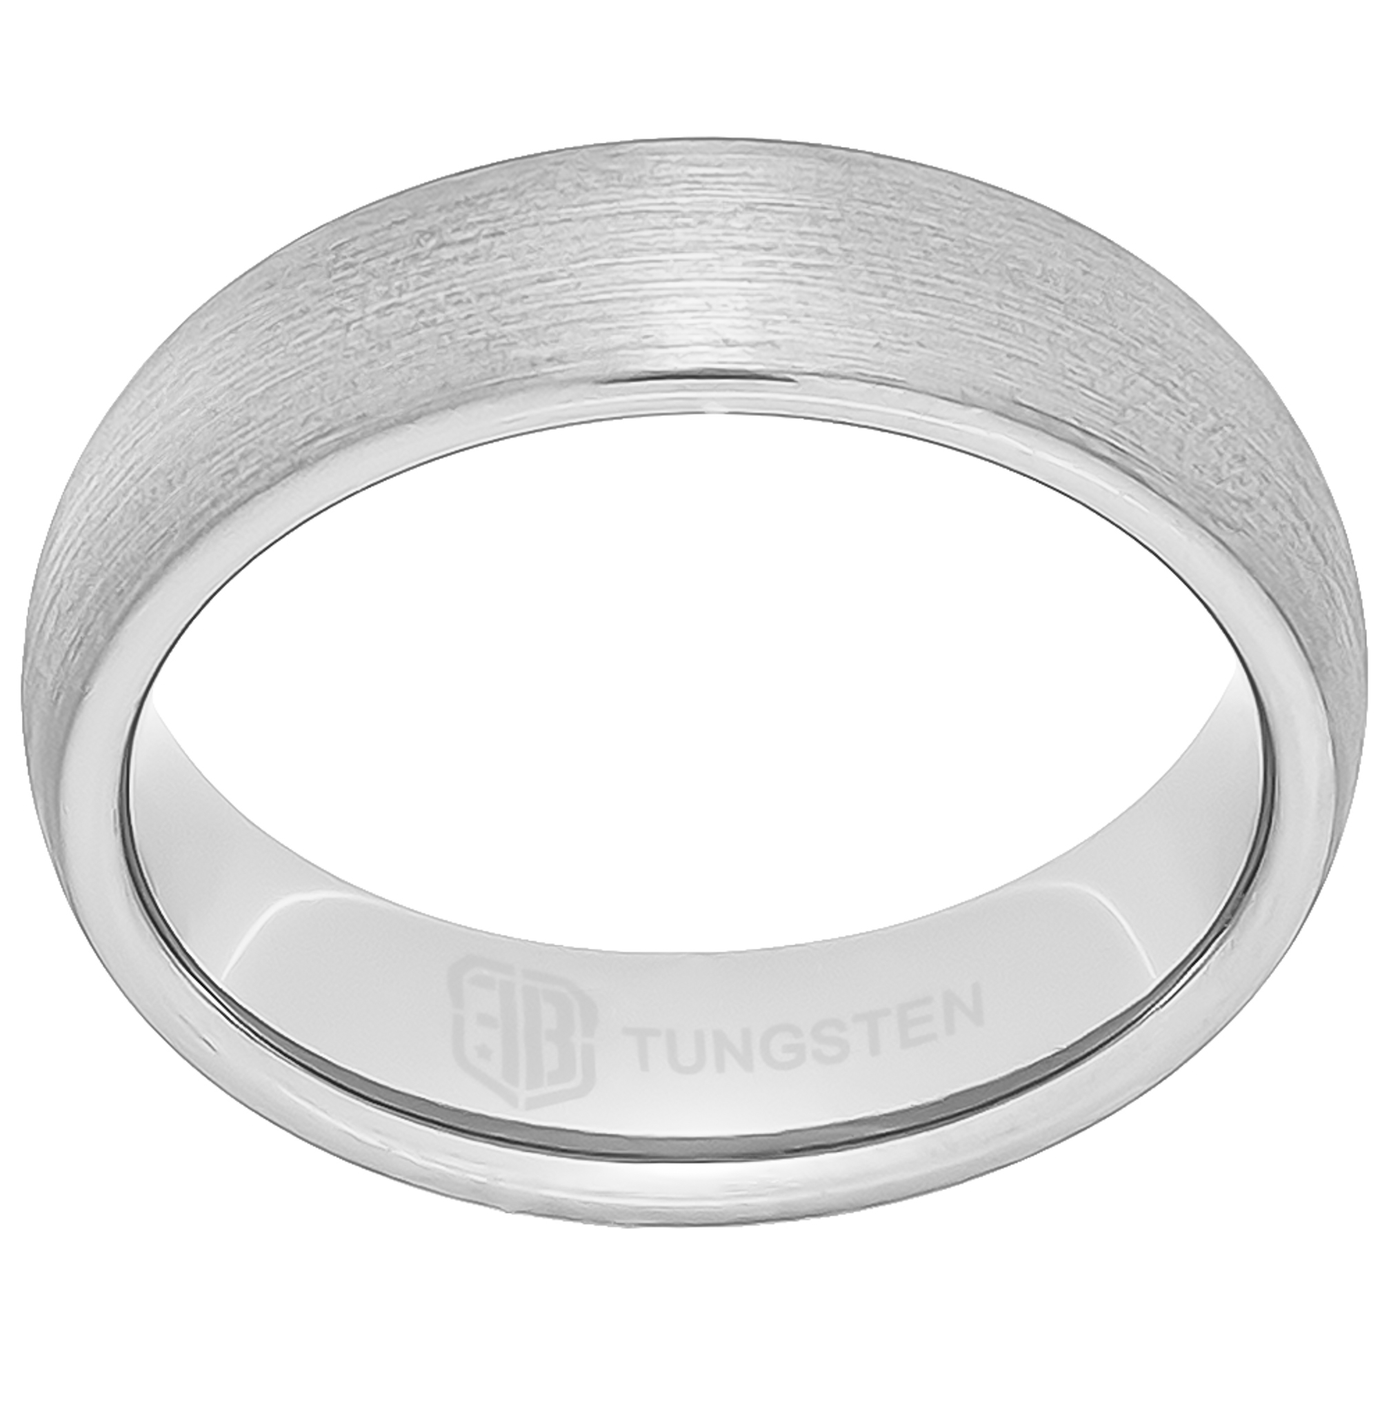 Brushed finish tungsten ring